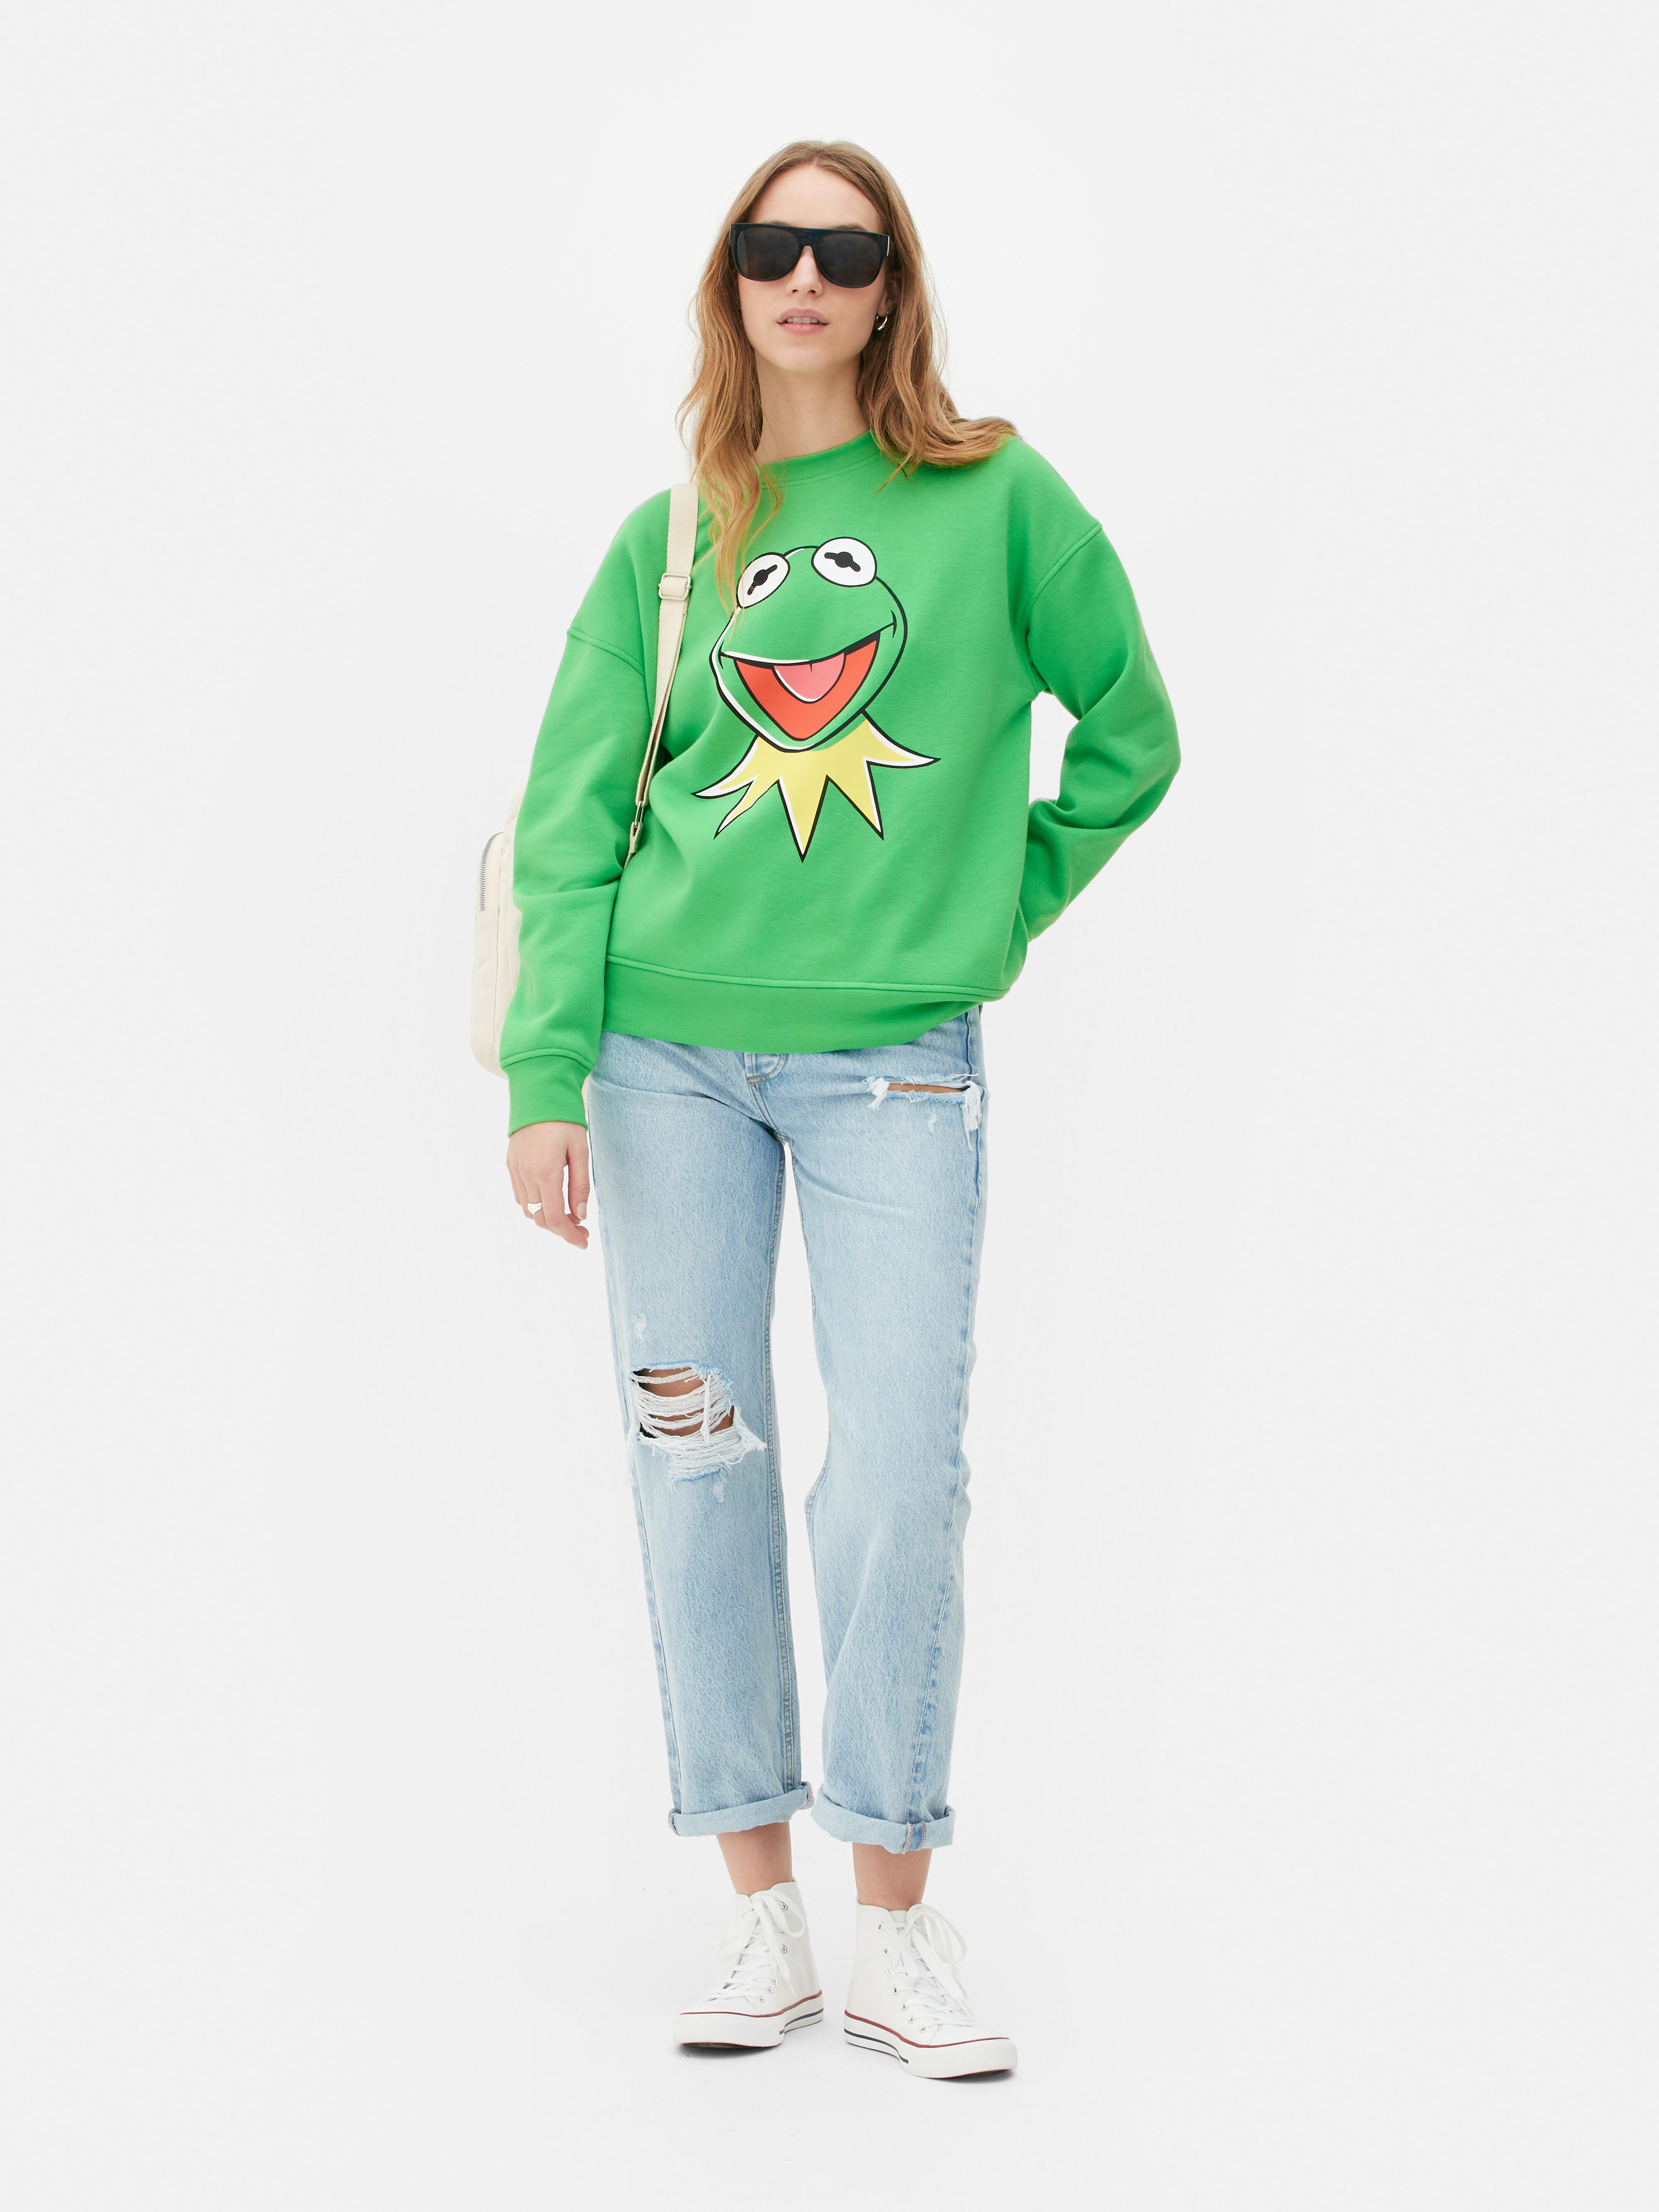 Disney’s The Muppets Kermit the Frog Sweatshirt